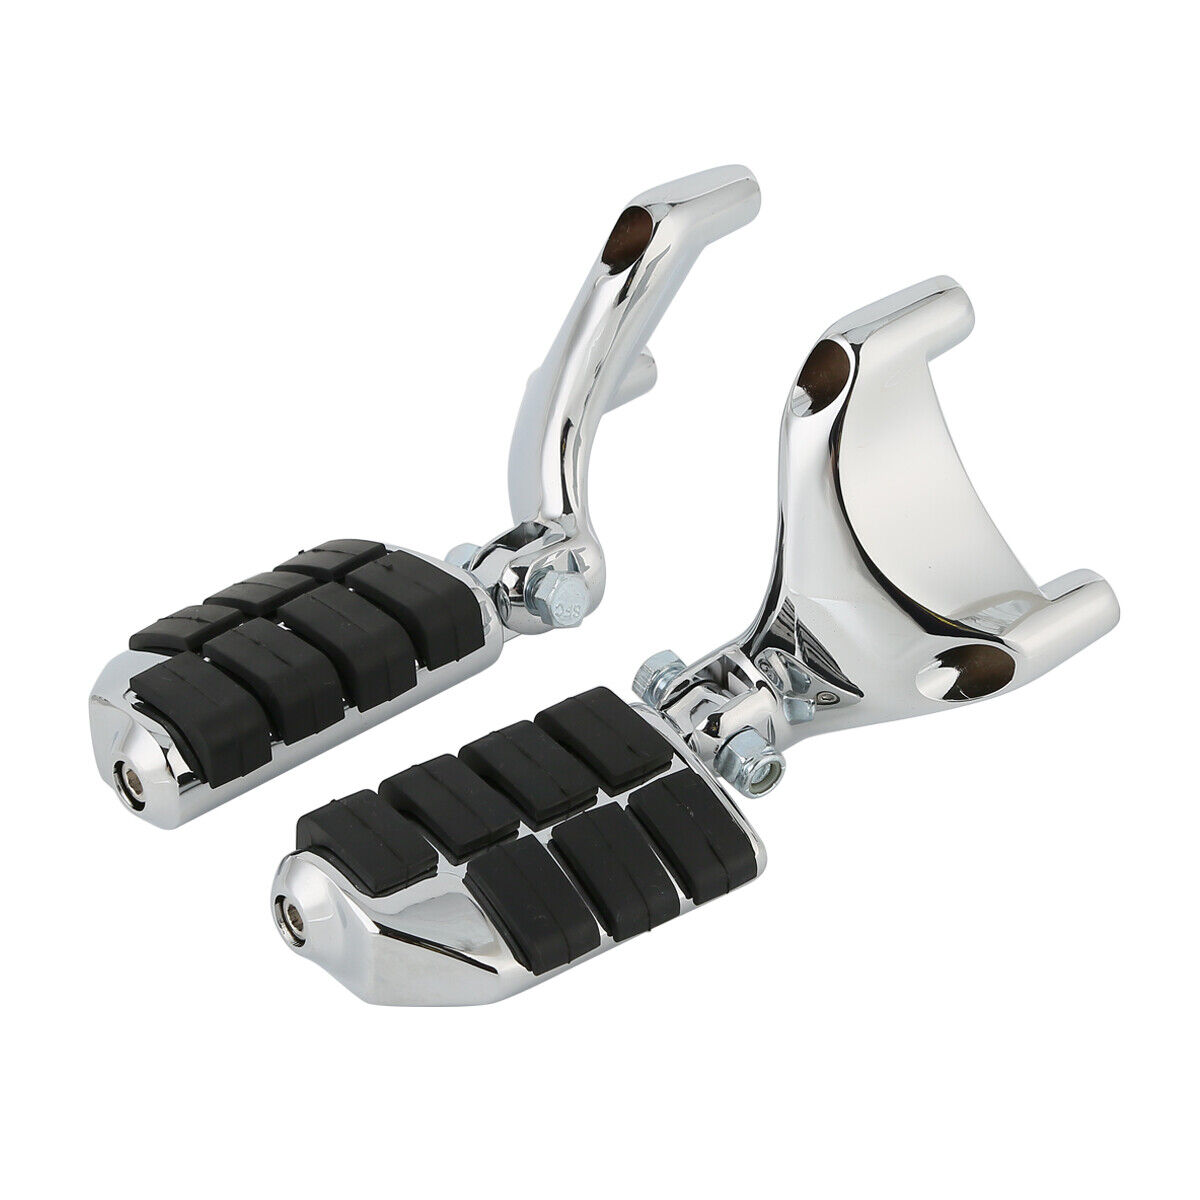 Chrome Passenger Footpegs W/ Mount Bracket Fit For Harley Sportster XL883 04-13